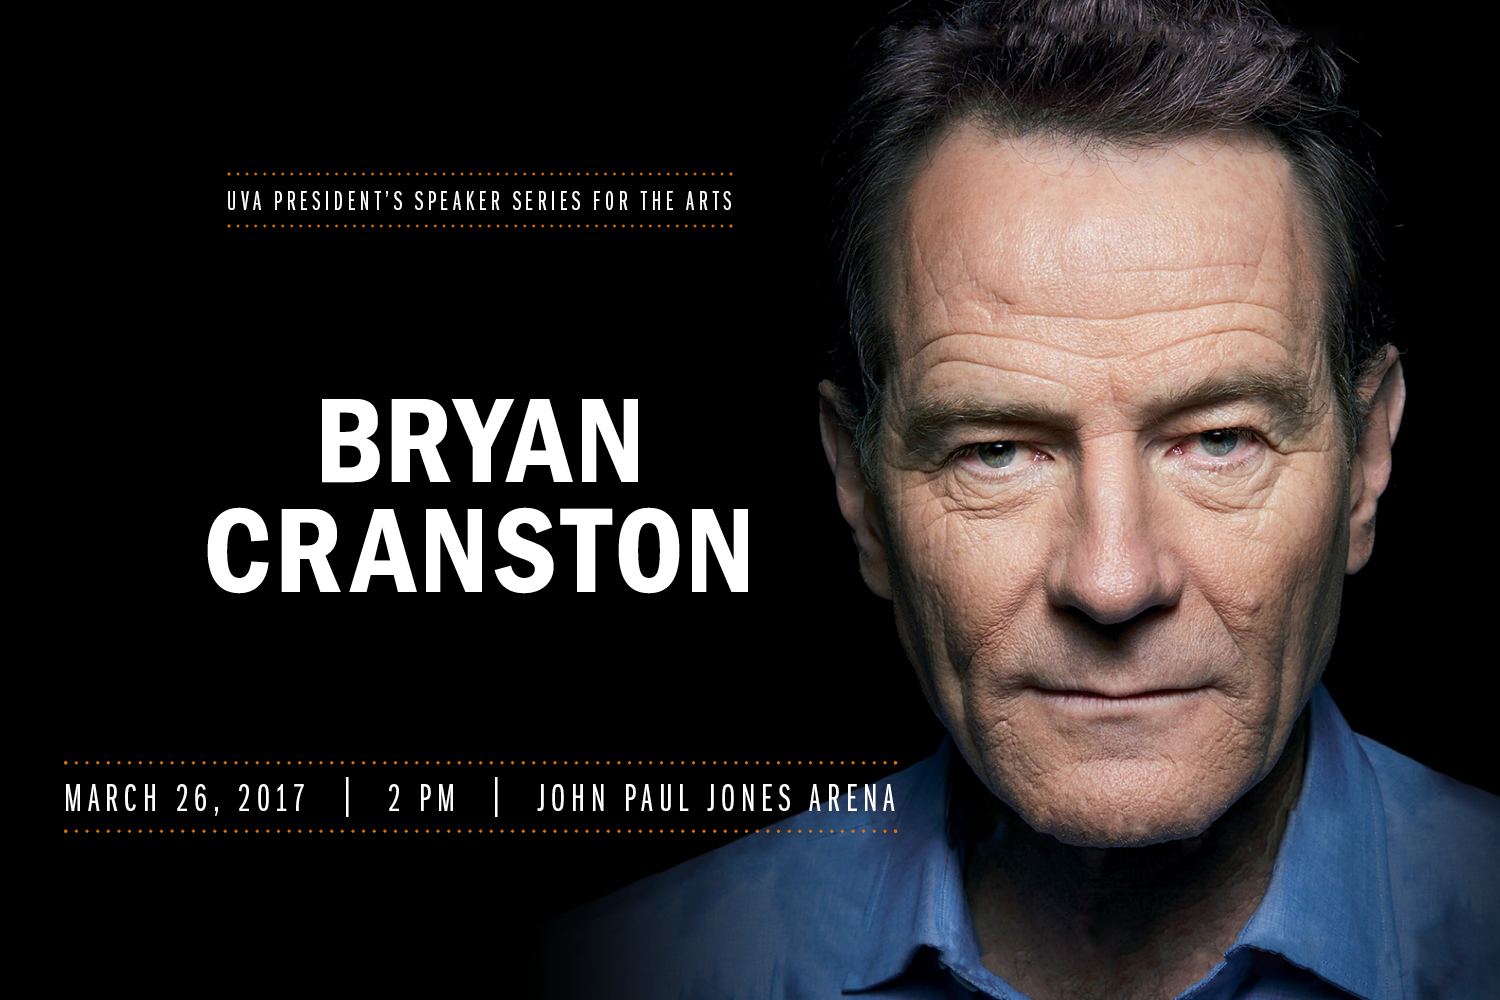 Bryan Cranston headshot with the text UVA president's speaker series for the arts Bryan Cranston March 26, 2017 at 2pm john paul jones arena